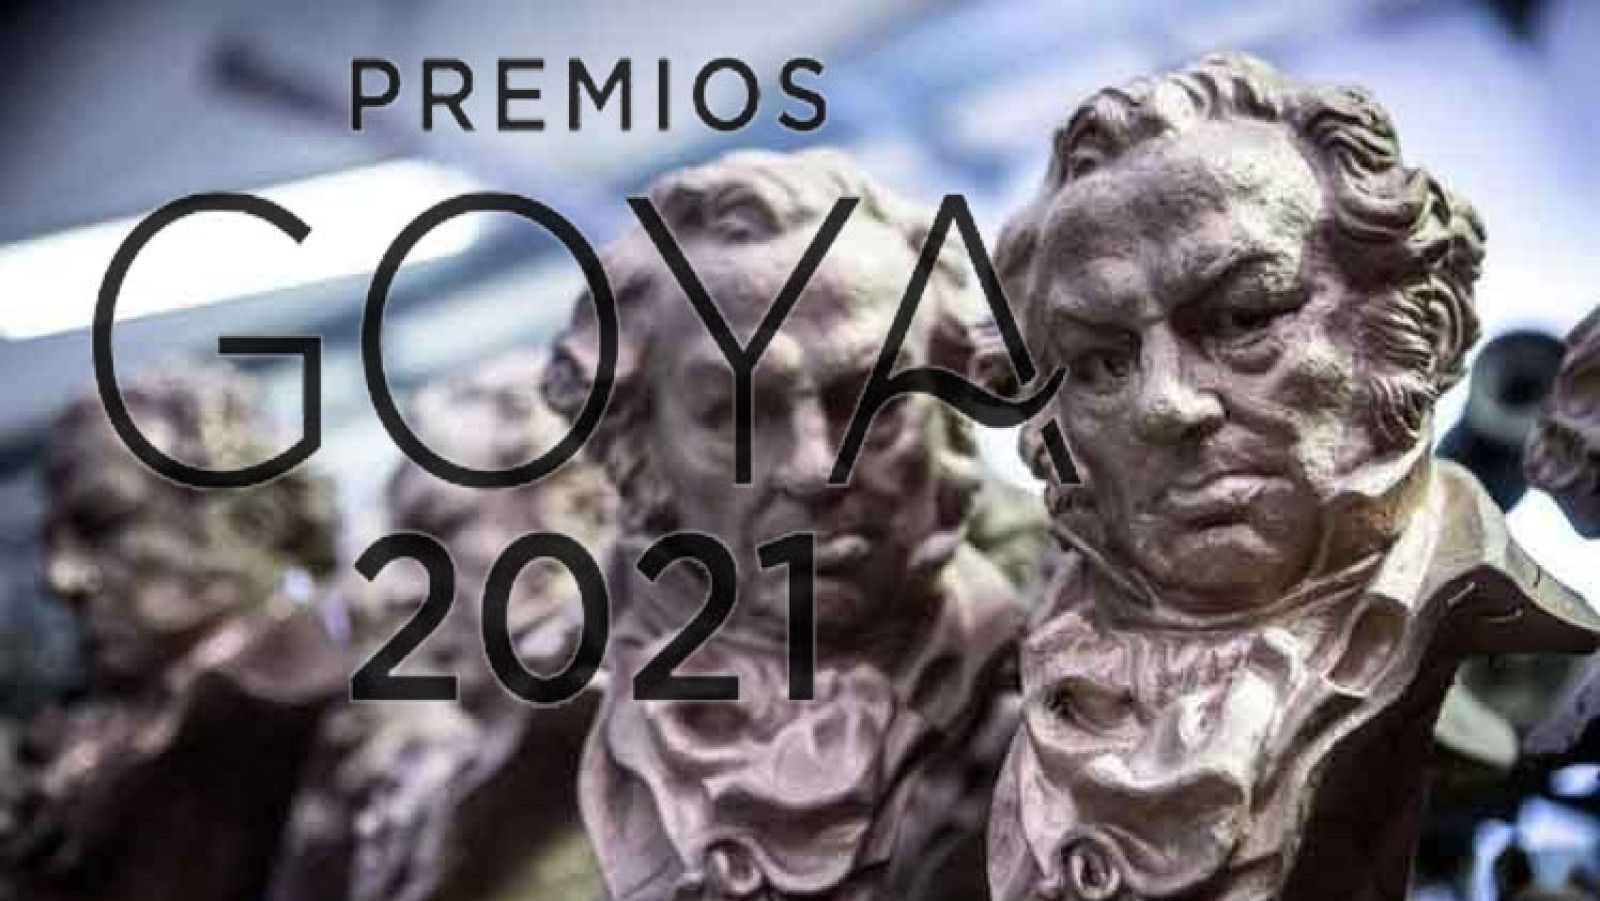 Premios Goya 2021